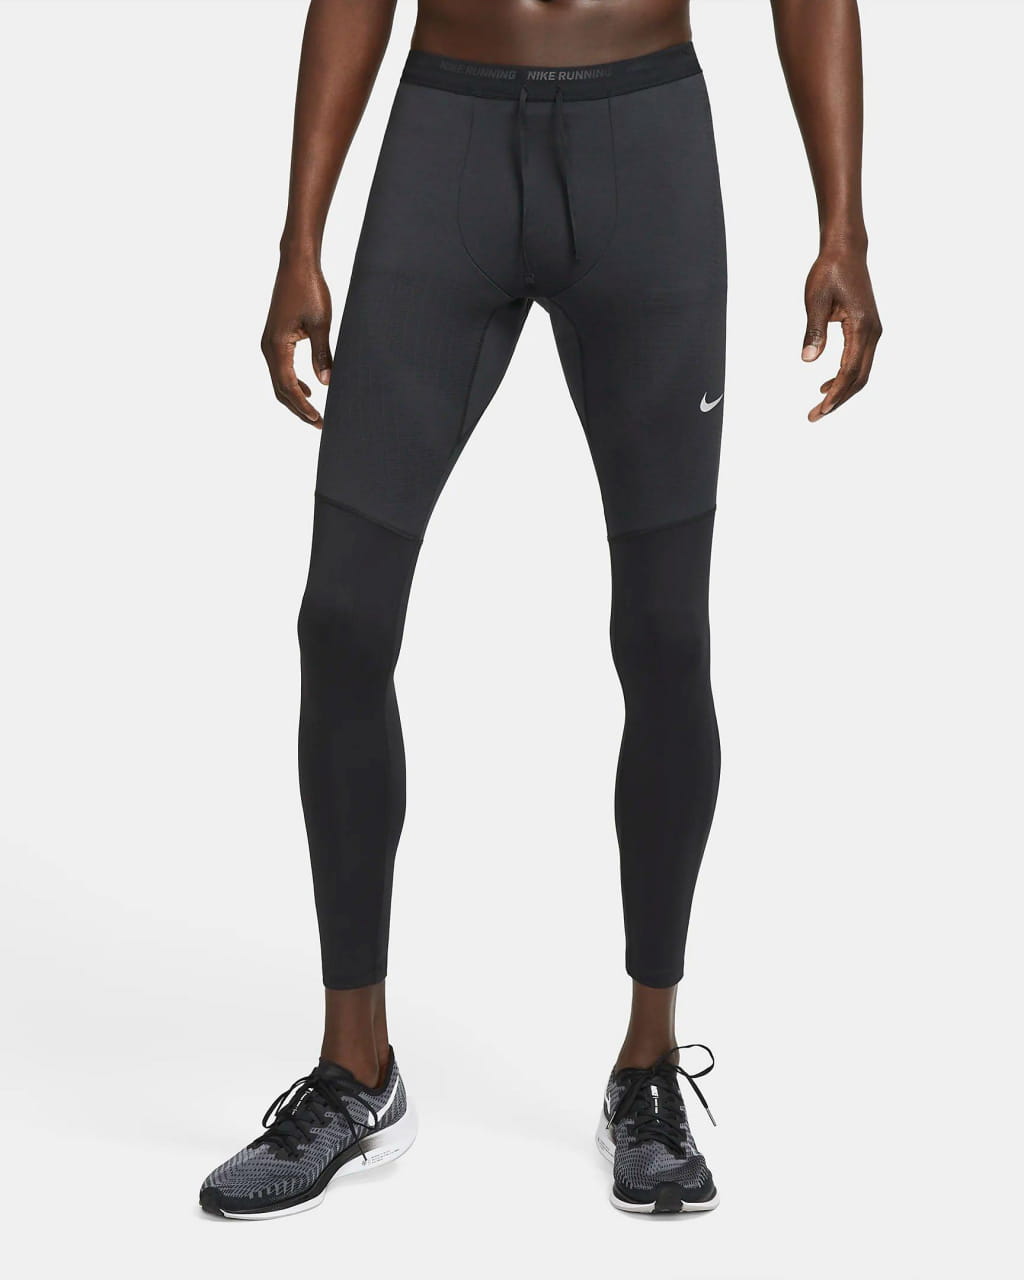 Jogginghose für Männer Nike Dri-FIT Phenom Elite Tight